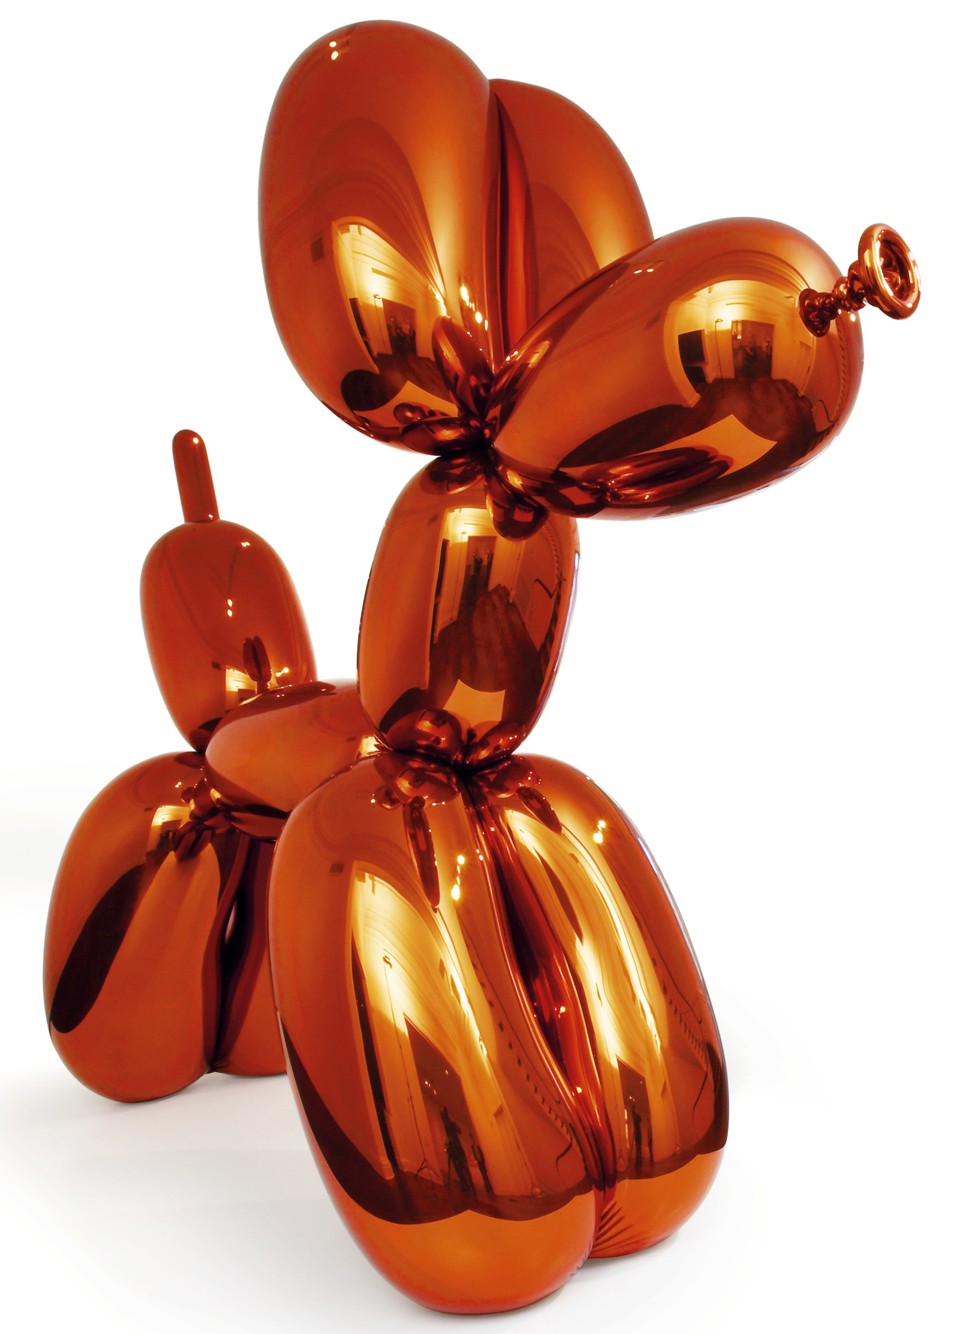 Louis Vuitton Balloon Dog Statue in Gold